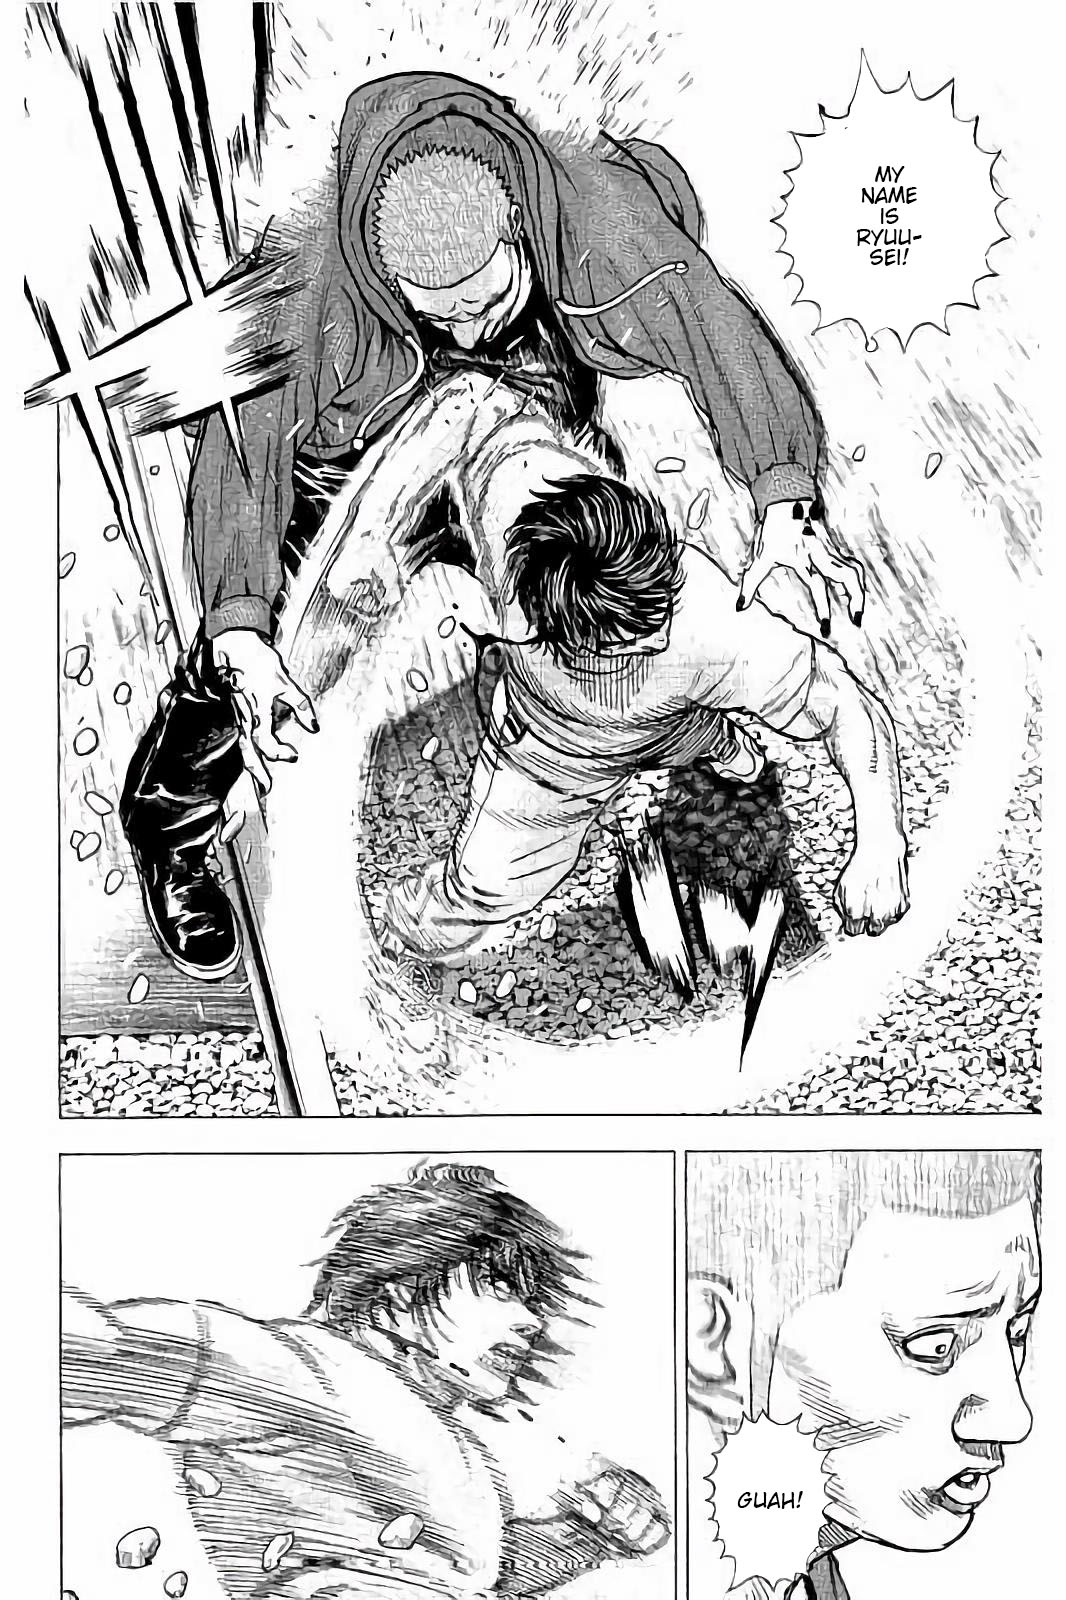 Tough Gaiden - Ryuu Wo Tsugu Otoko Vol.2 Chapter 15: The Dragon's Fist - Picture 2